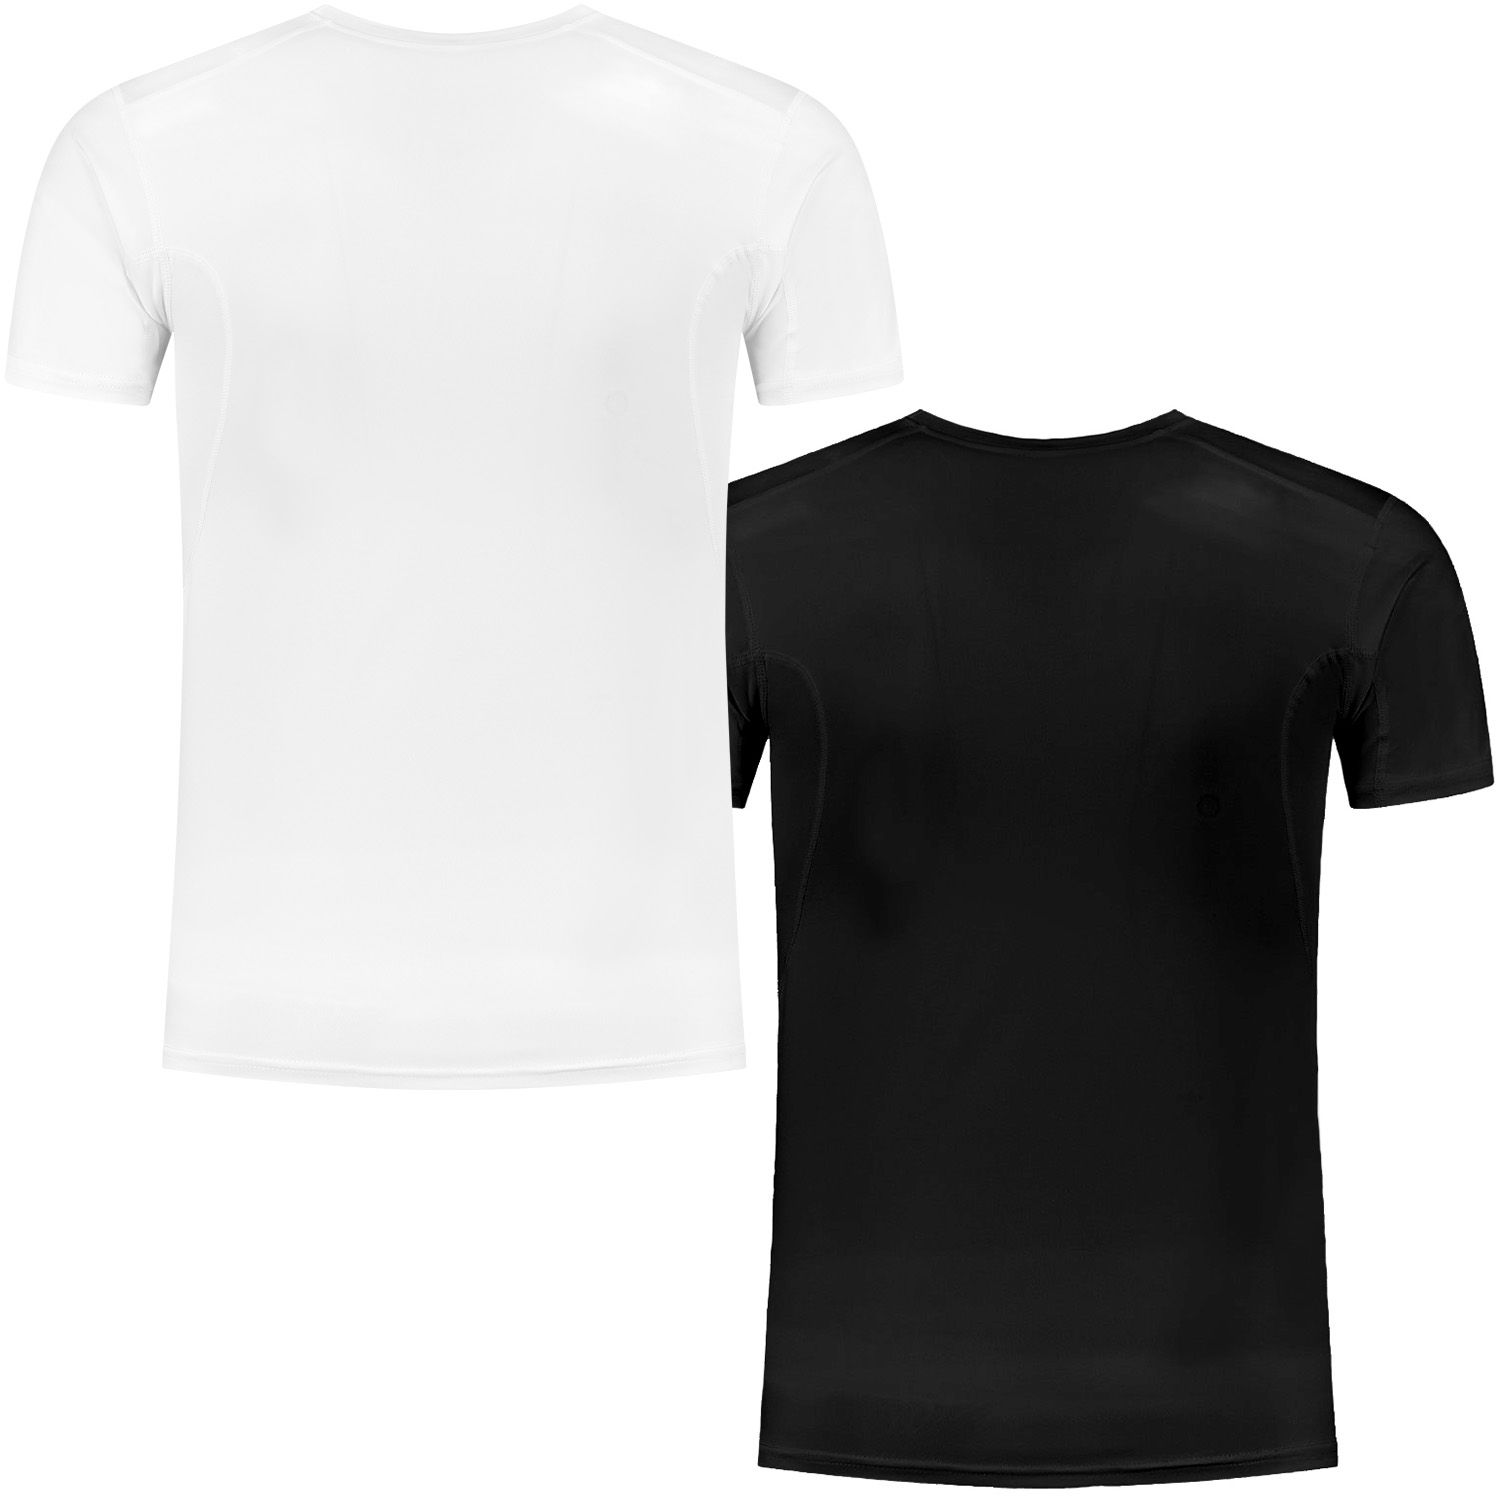 gladiator sports thermal shirt for men black and white back